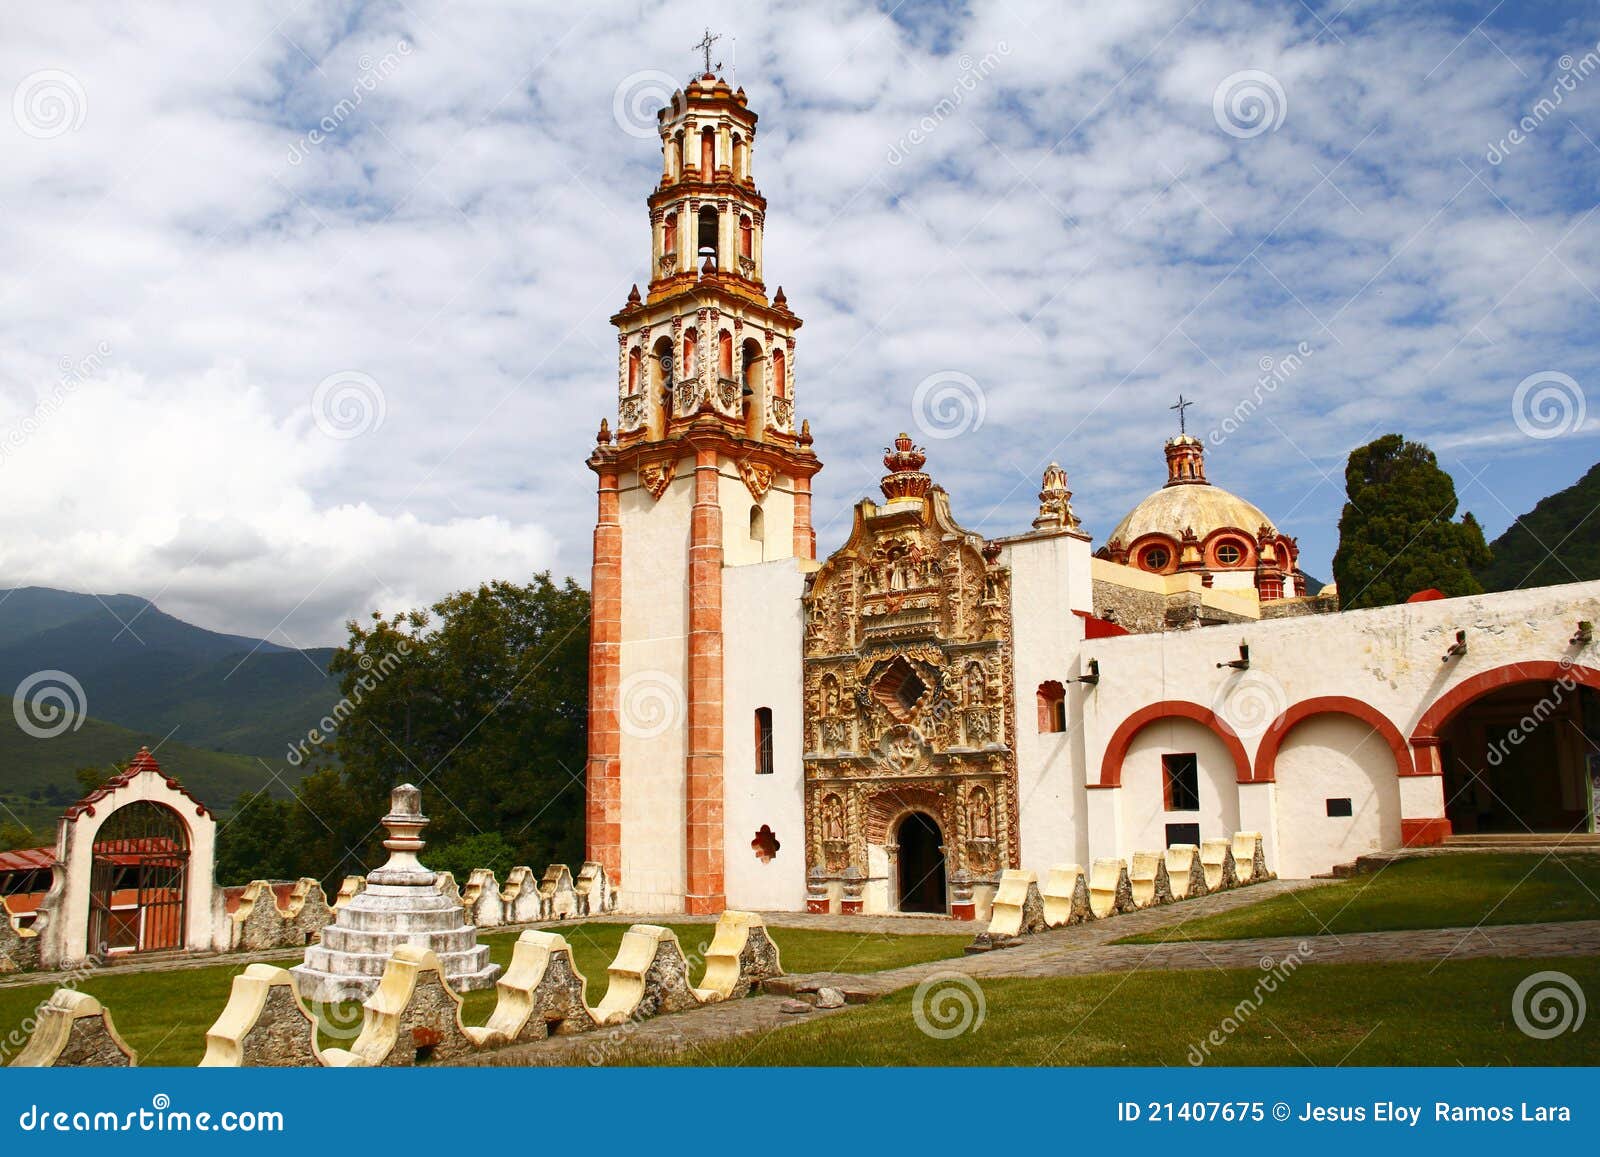 baroque tilaco  mission near jalpan de serra in queretaro, mexico iv